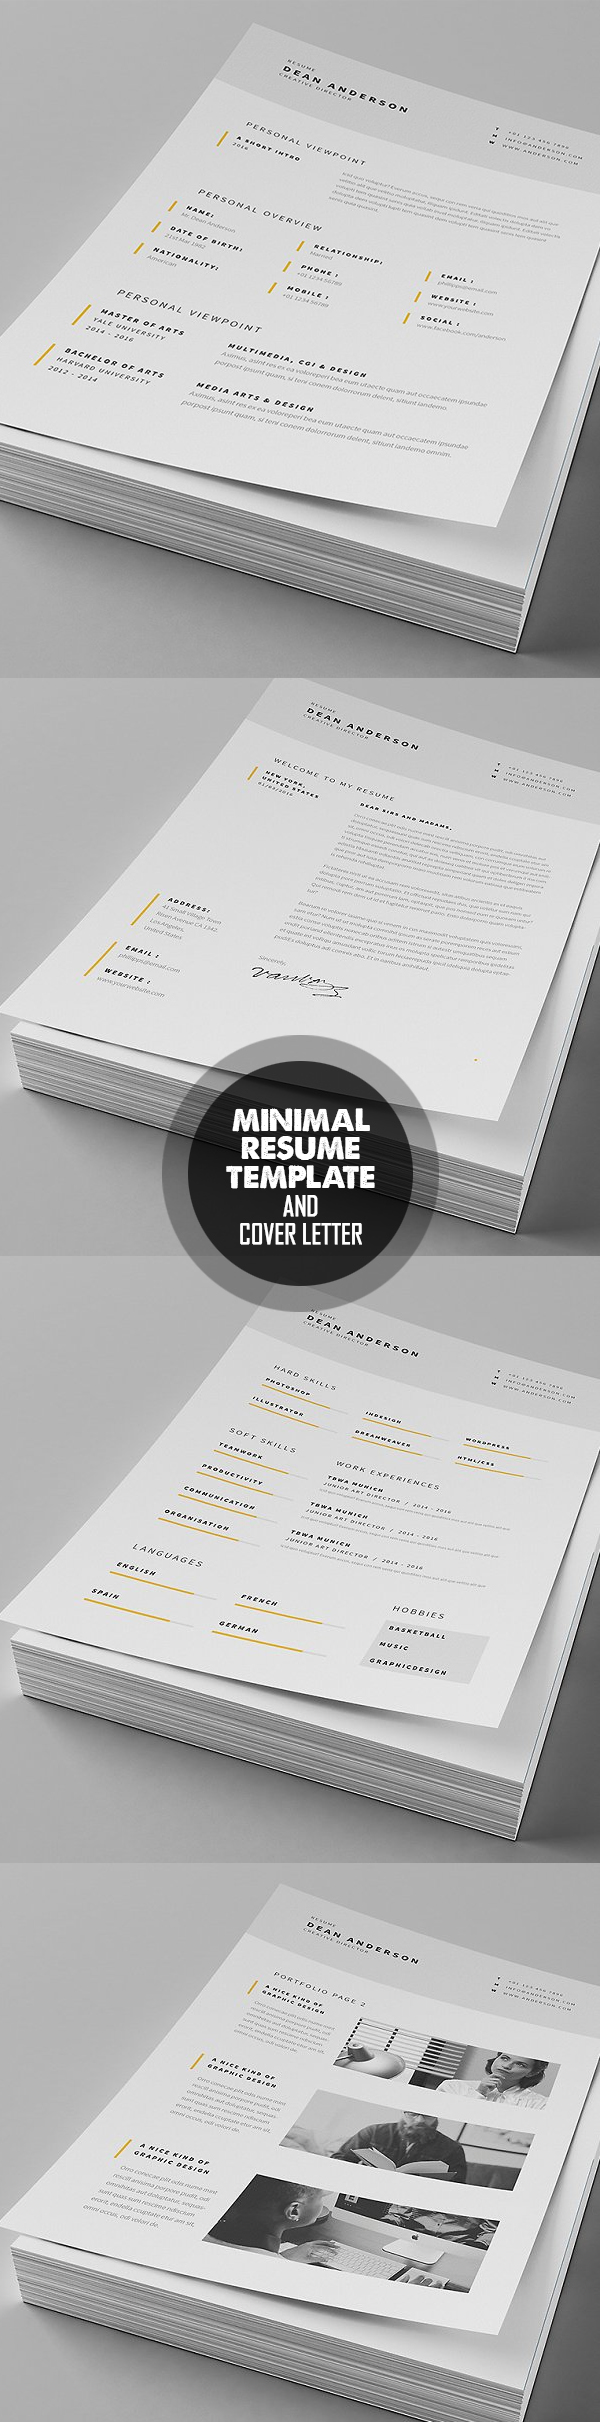 Minimal Resume   Cover Letter Template